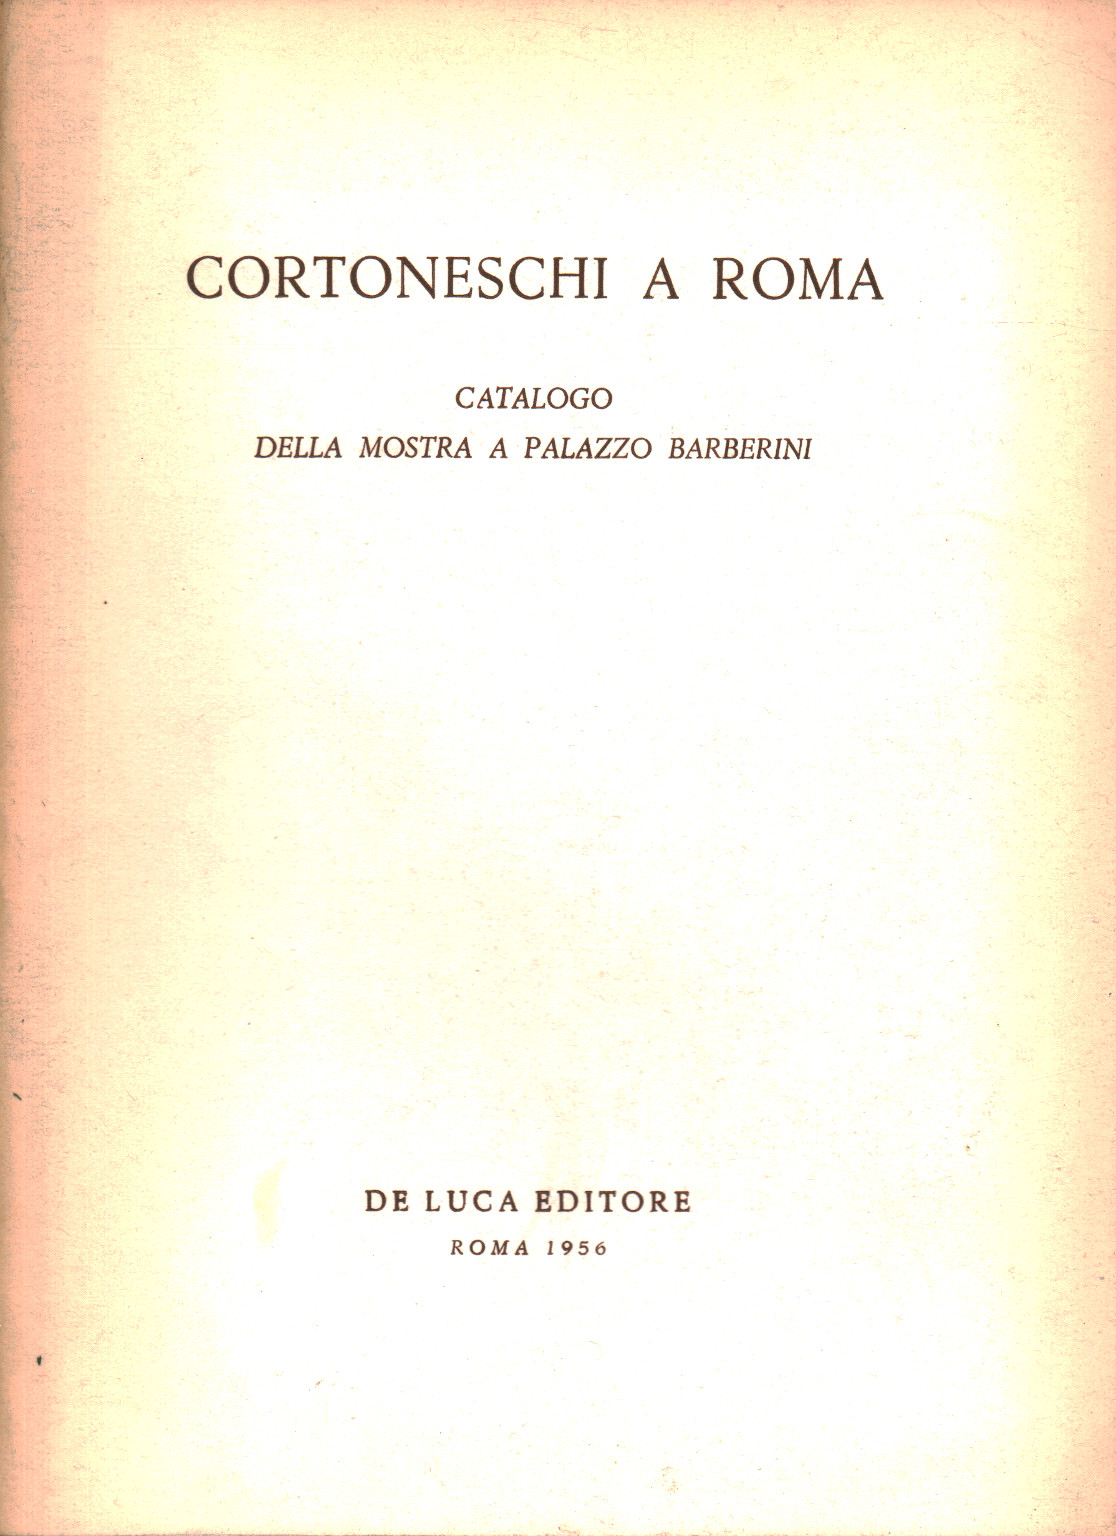 Cortoneschi a Roma, s.a.